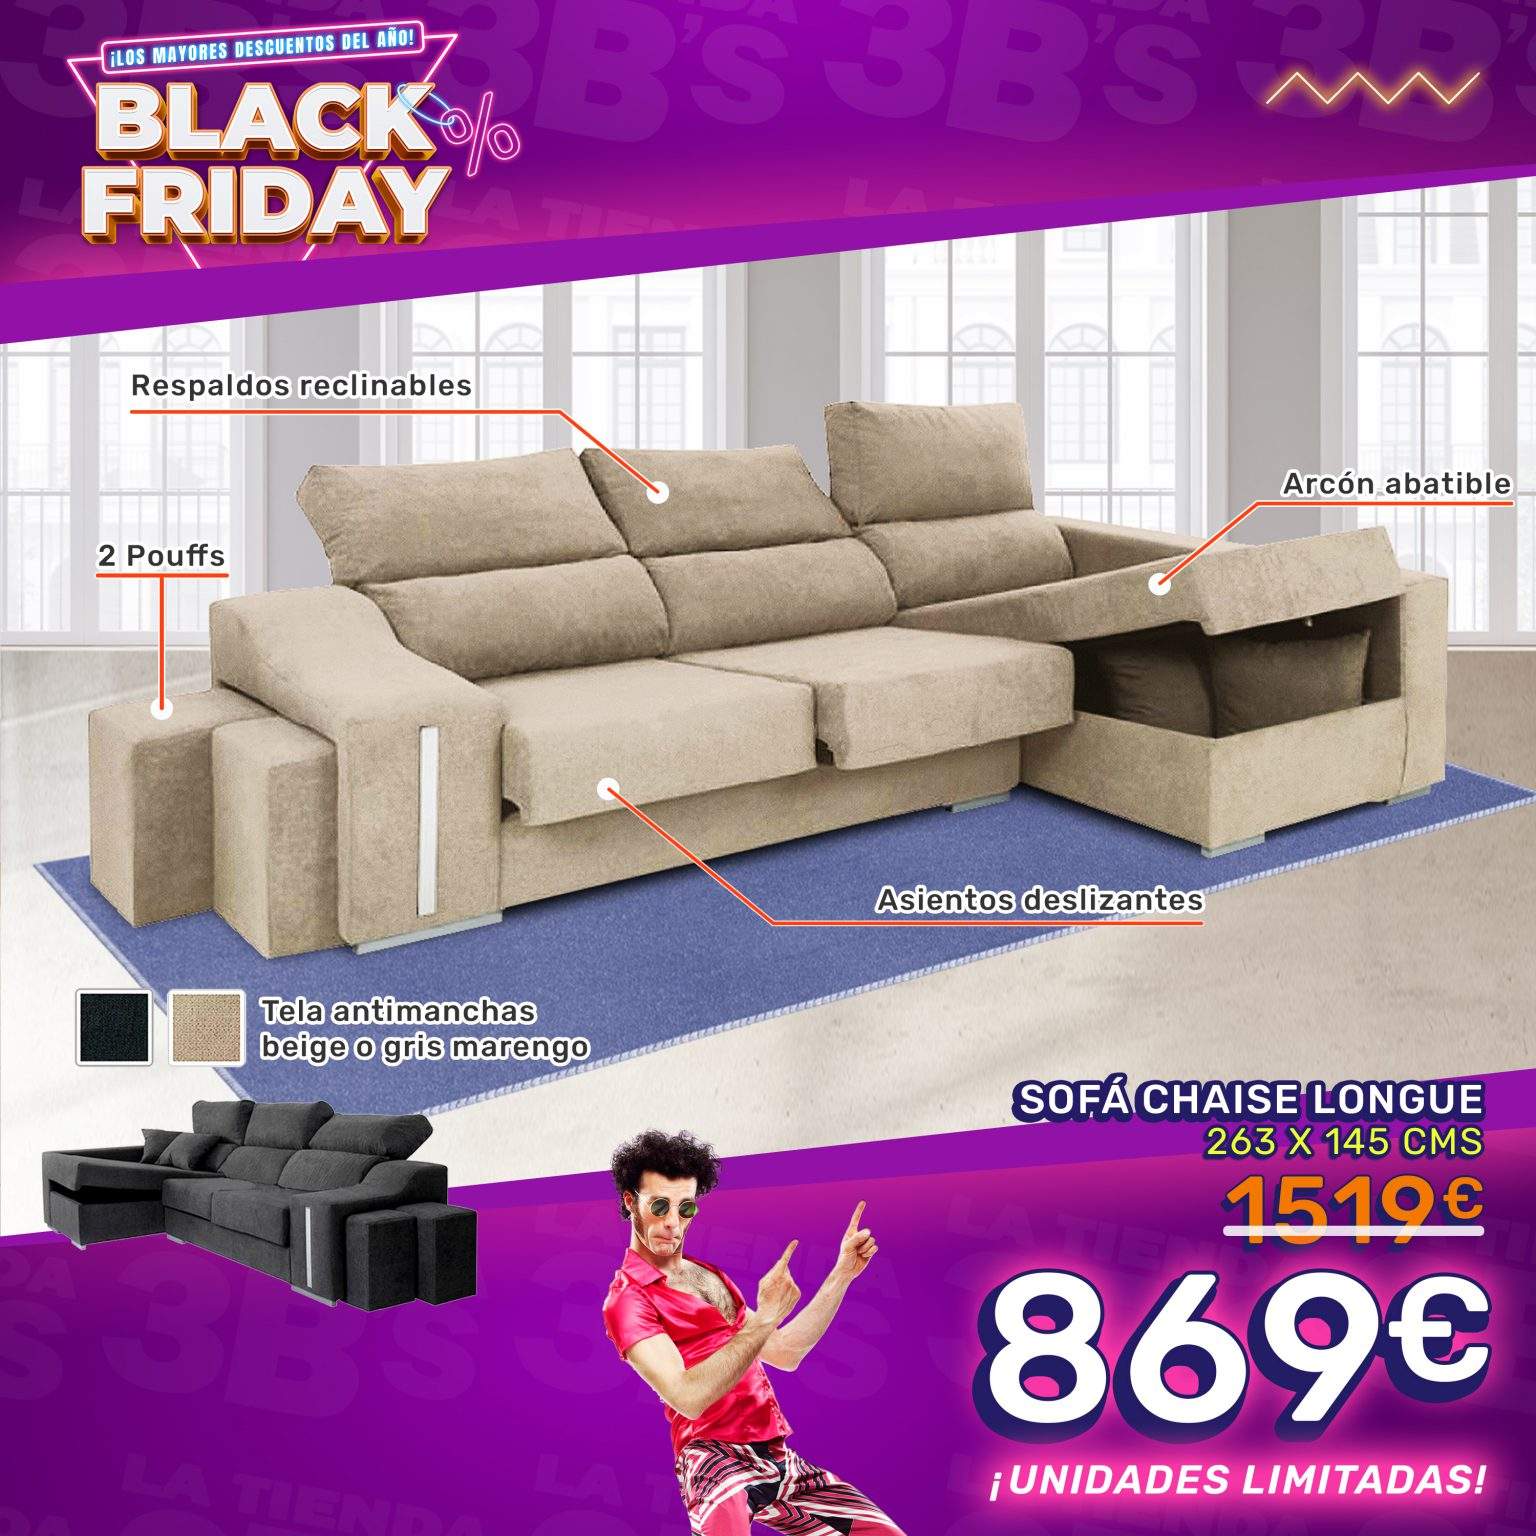 Black Friday 2022 Oferta sofa chaiselongue | La Tienda 3Bs